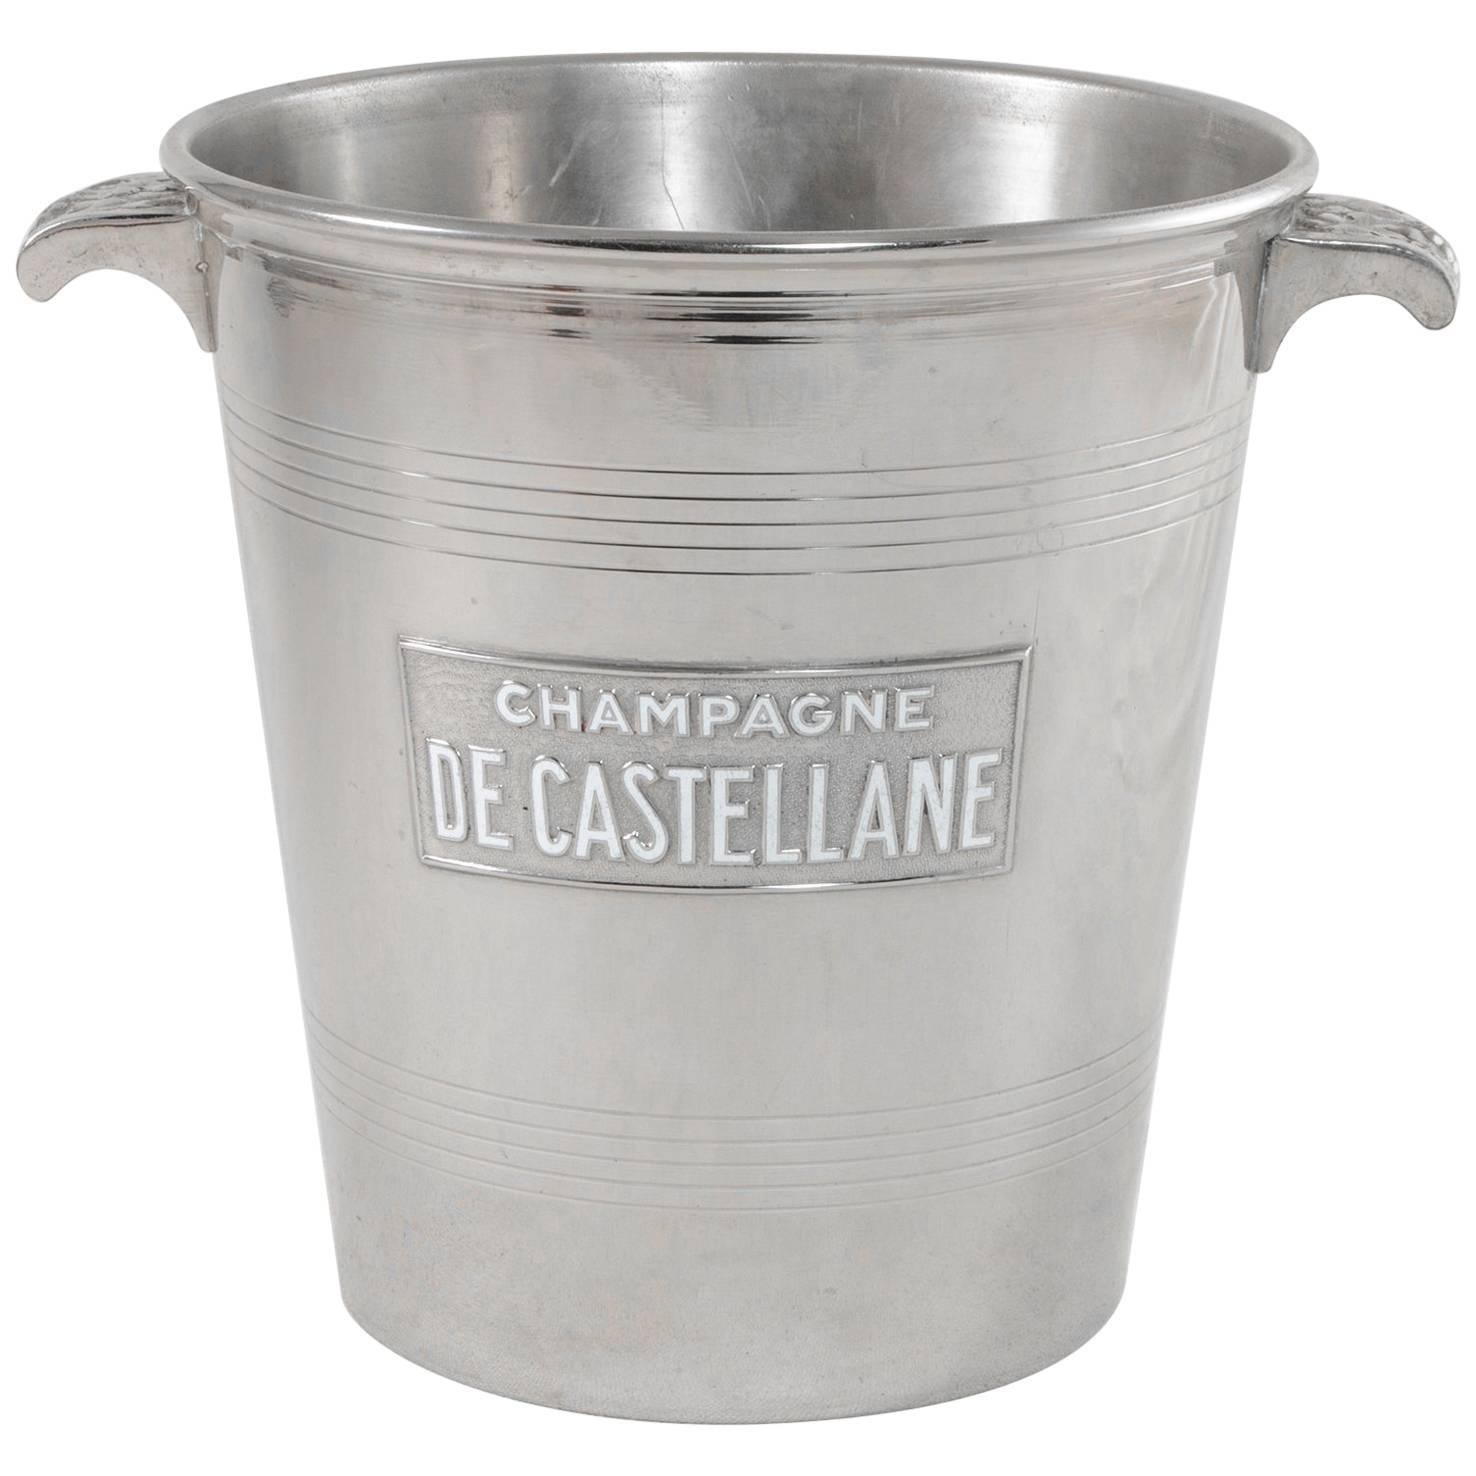 Early 20th Century Silver Plate De Castellane Champagne Bucket, Enameled Letters